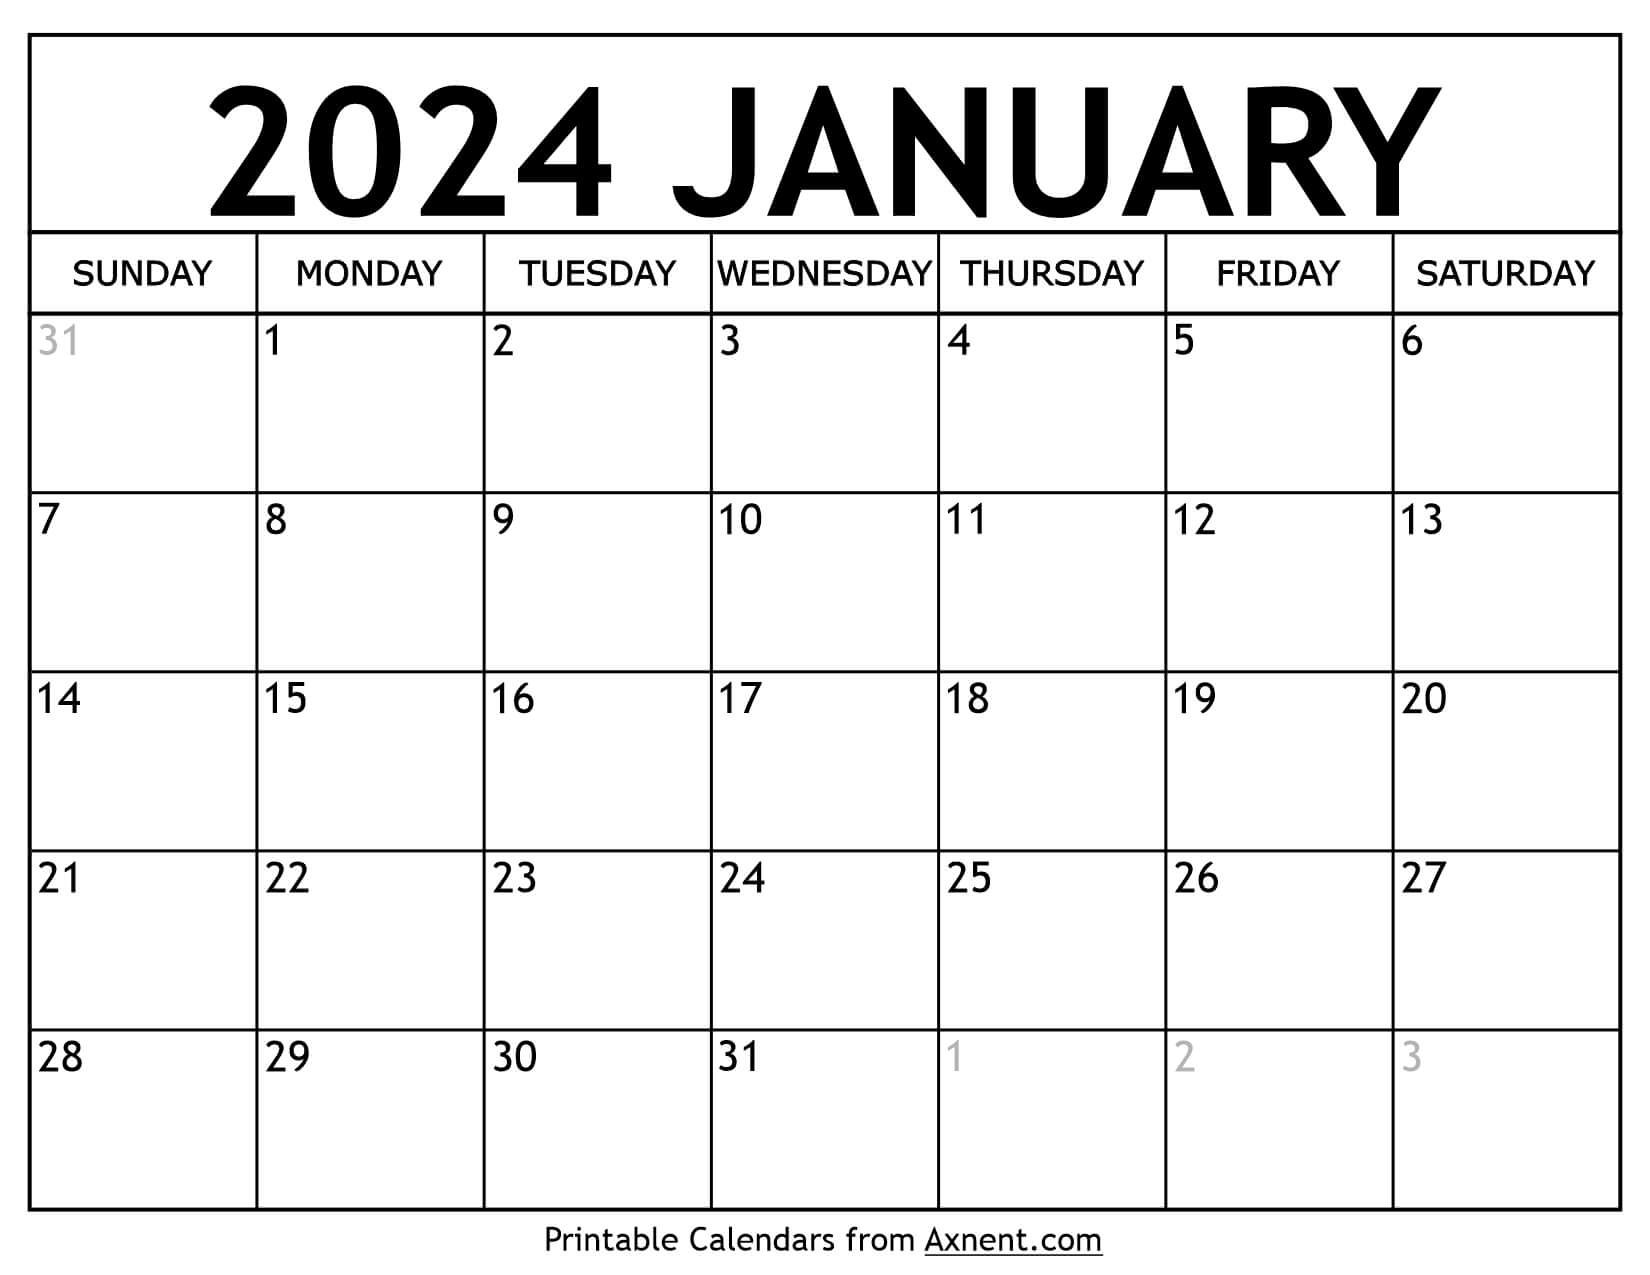 Printable January 2024 Calendar Template - Print Now for Free 2024 January Printable Calendar